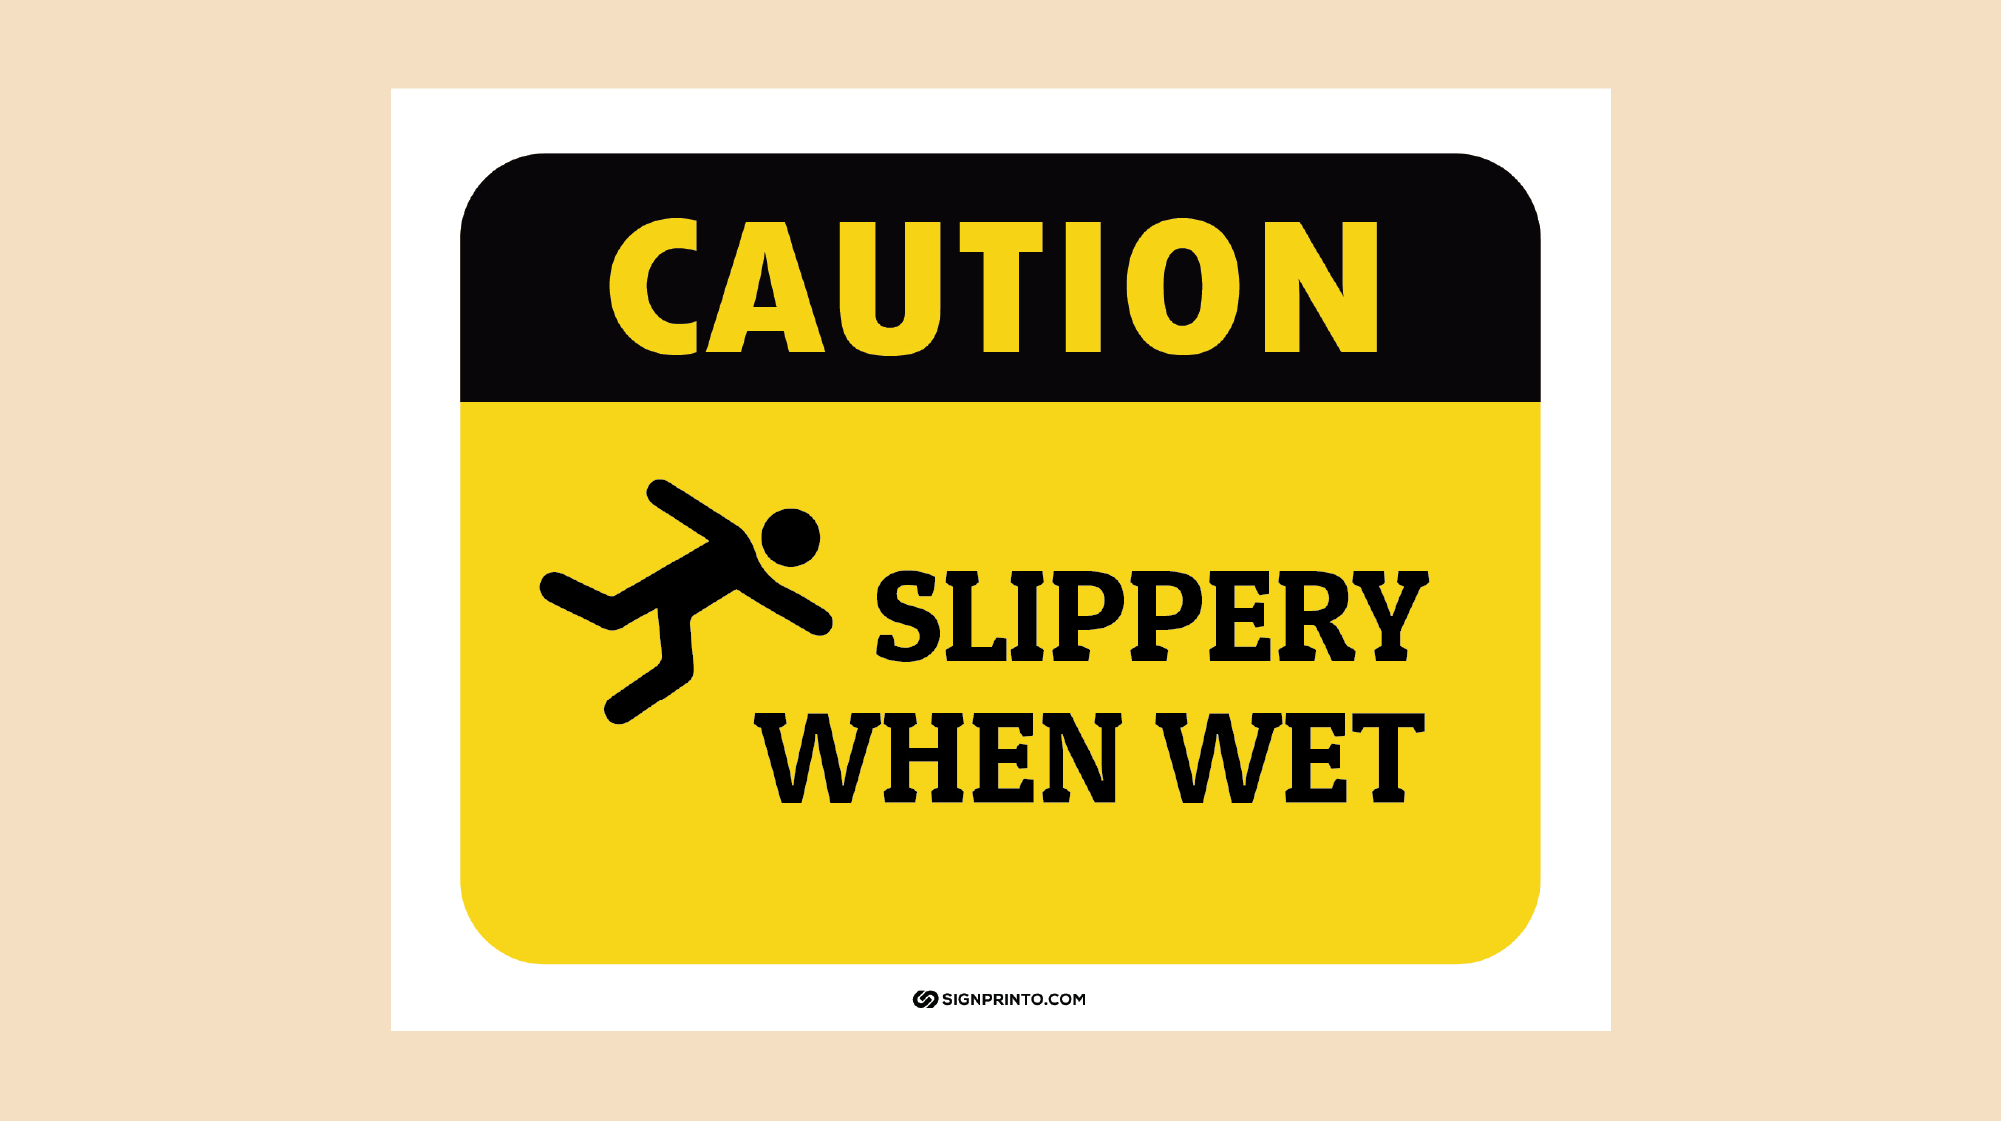 Slippery When Wet sign